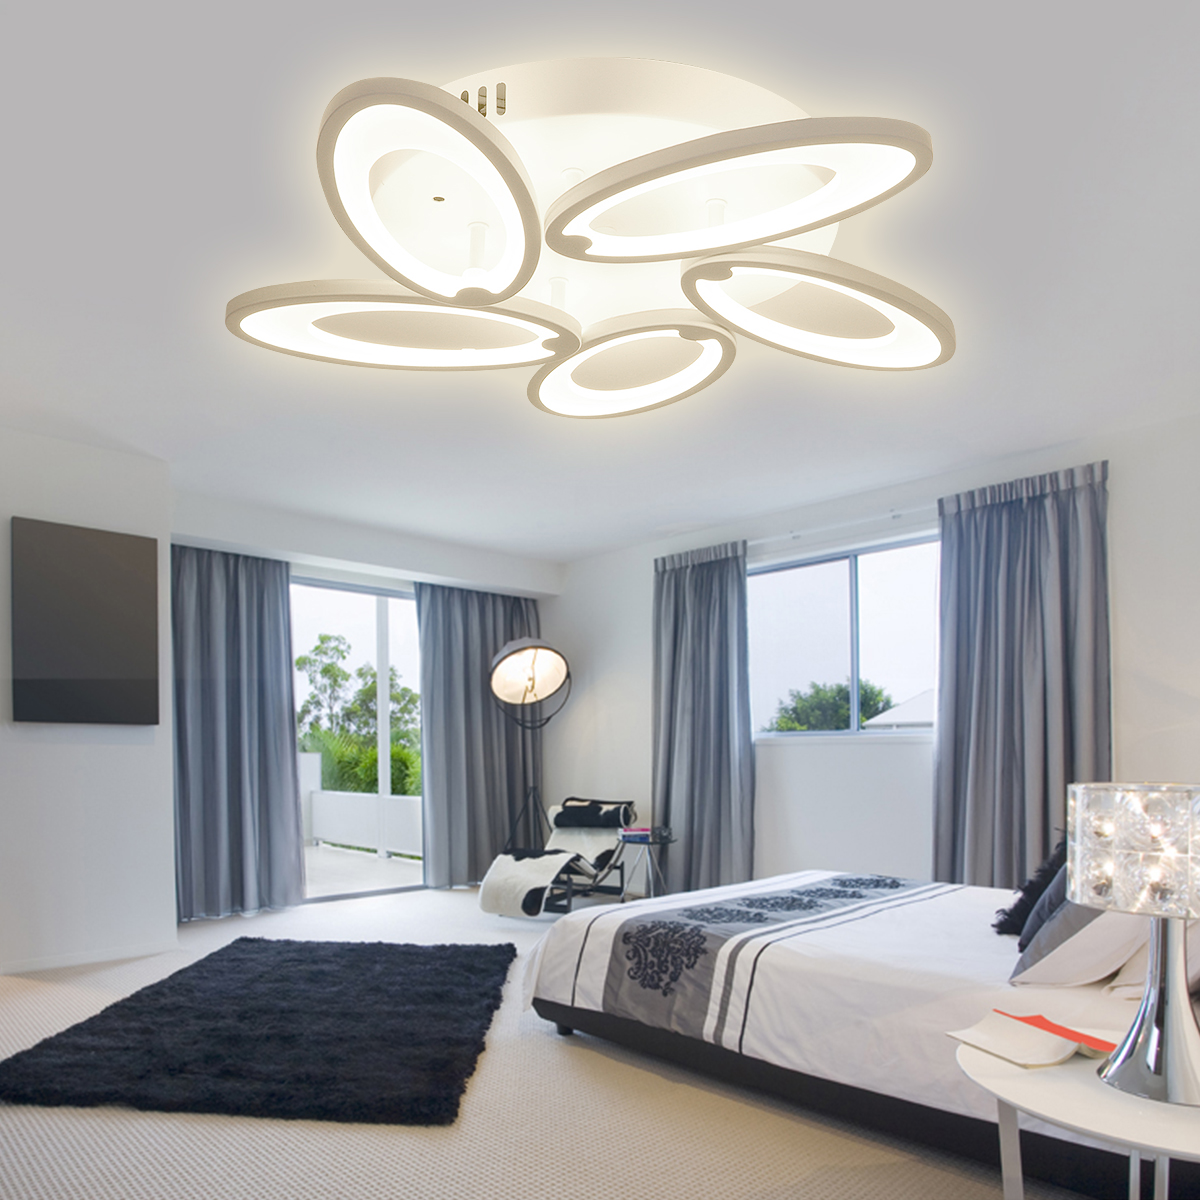 5-Heads-Modern-LED-Ceiling-Acrylic-Home-Lights-Home-Chandelier-LampRemote-3200-6500K-1793901-10